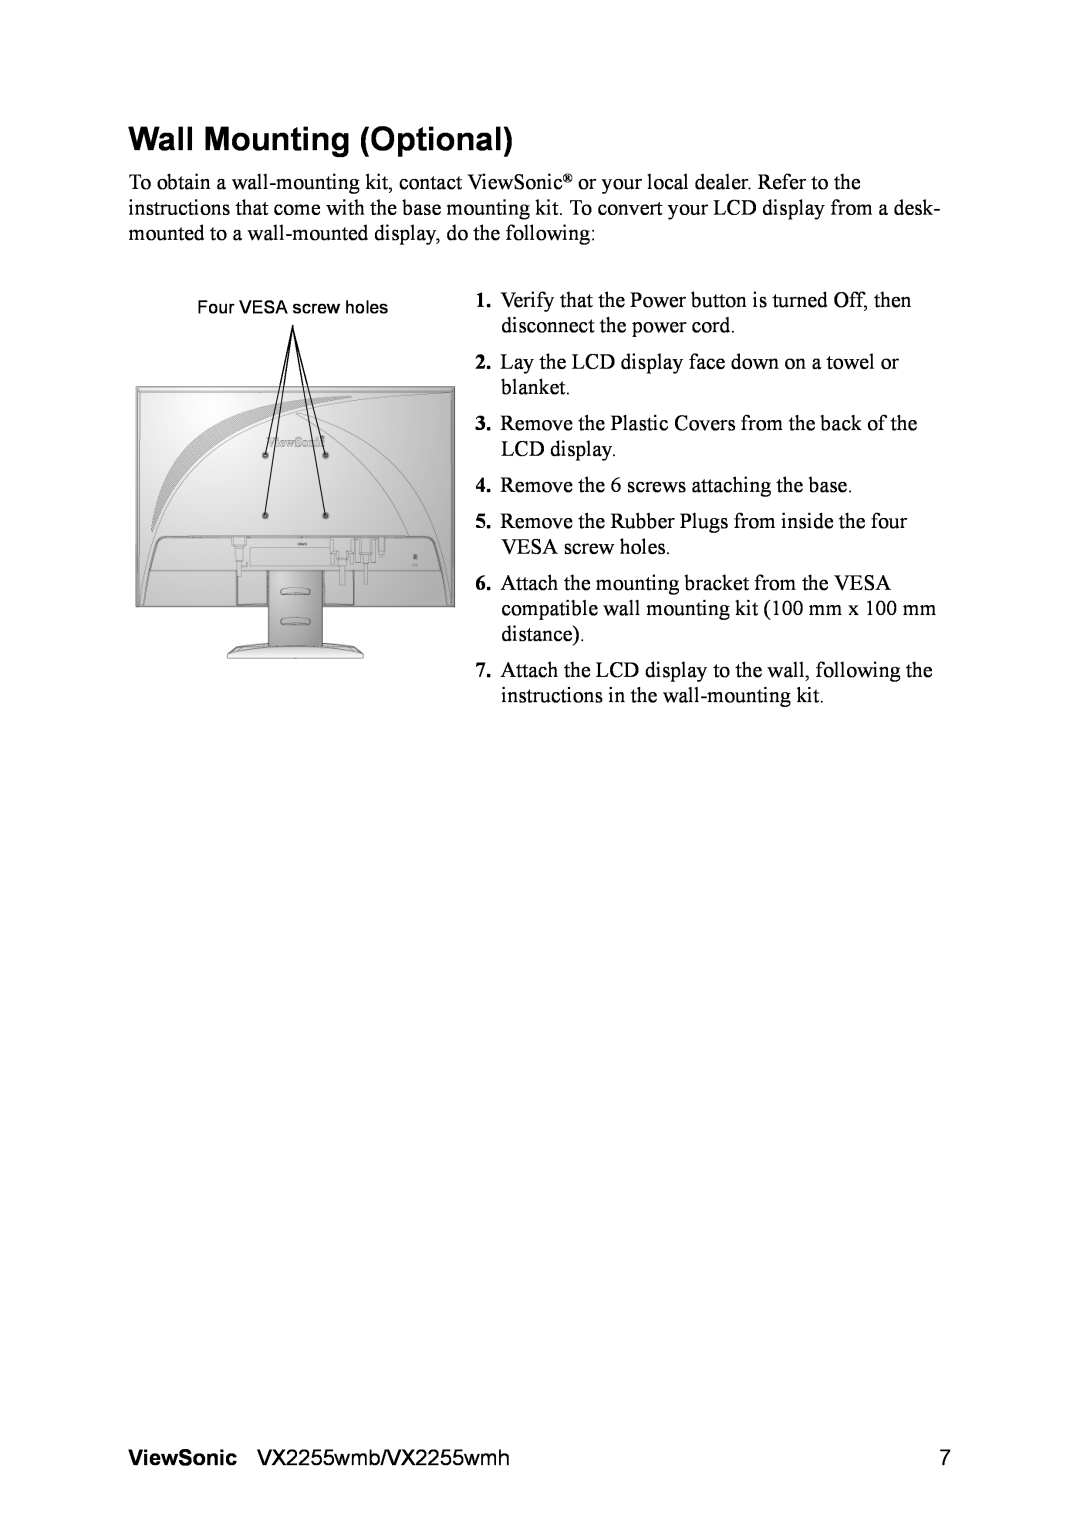 ViewSonic VX2255WMH manual Wall Mounting Optional 